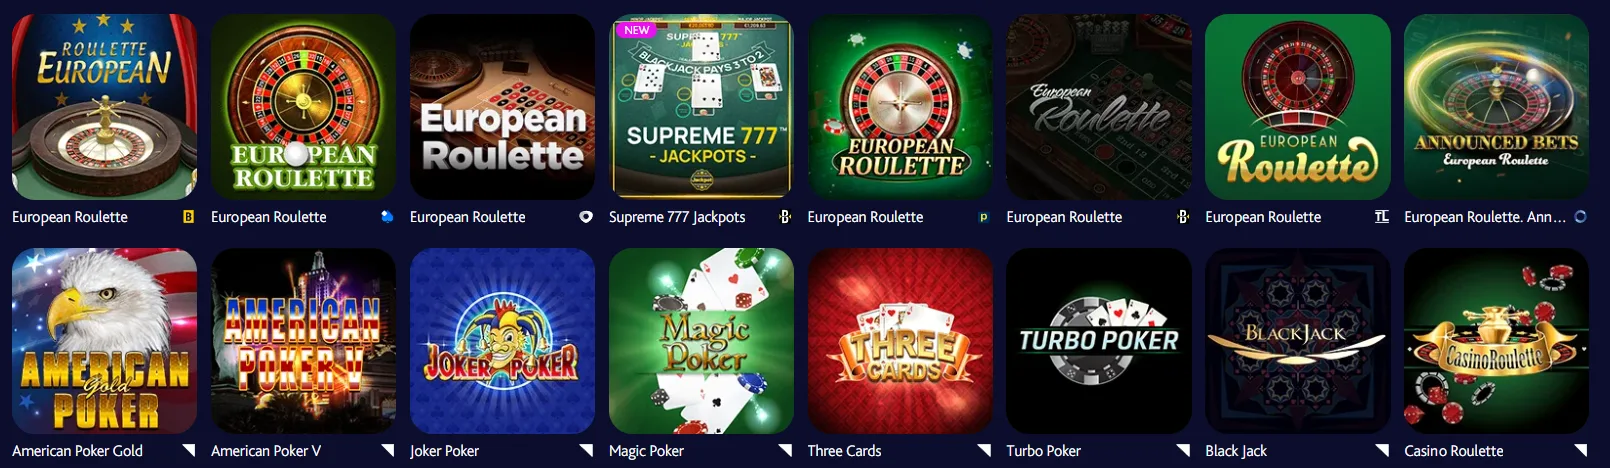 7Bit Casino games